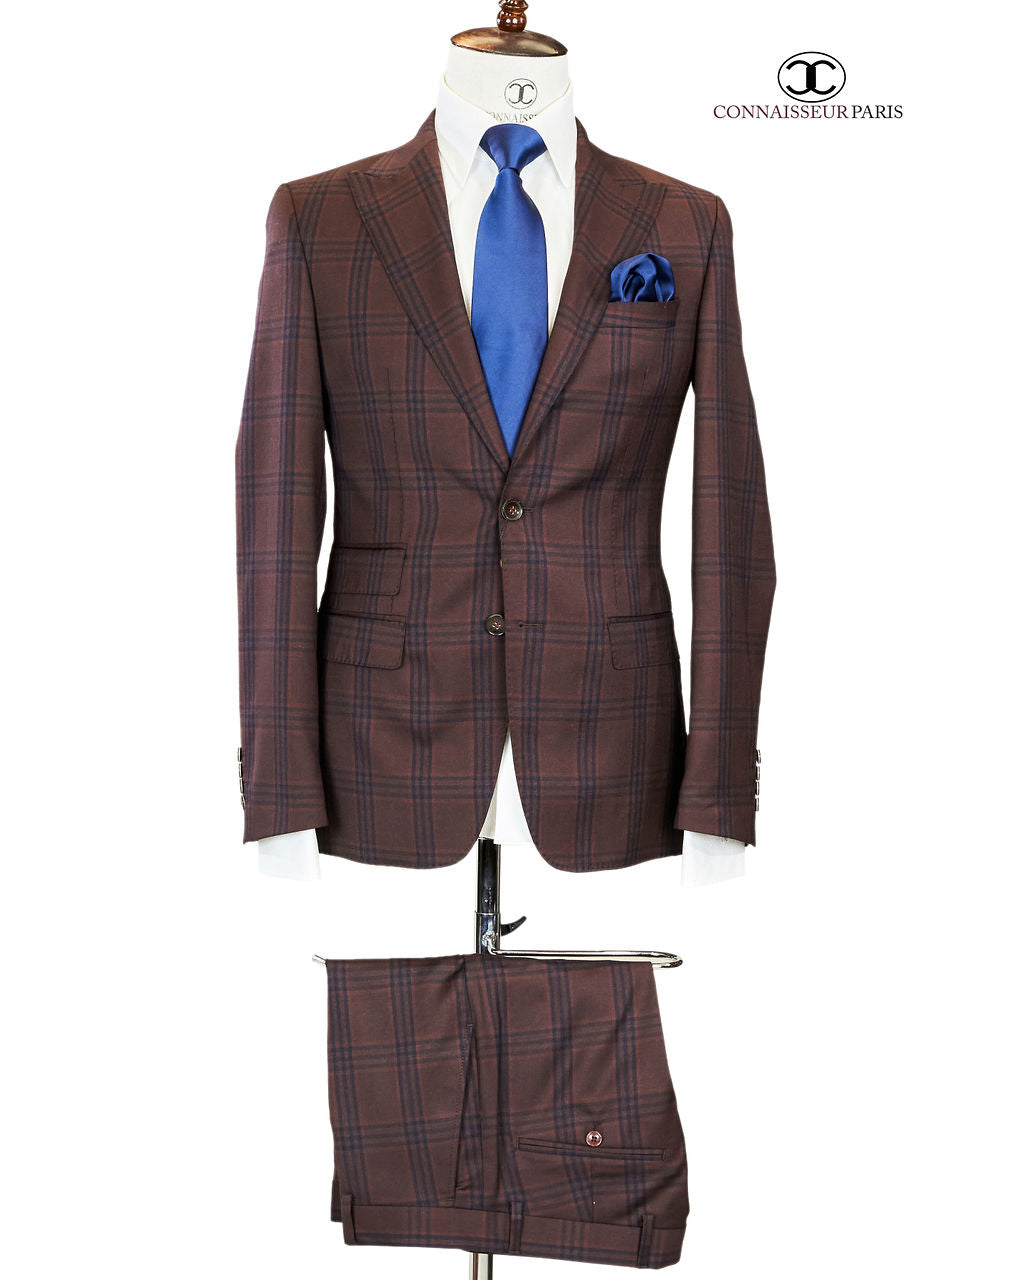 Cerruti - Dark brown with blue and orange plaid 2-piece slim fit suit